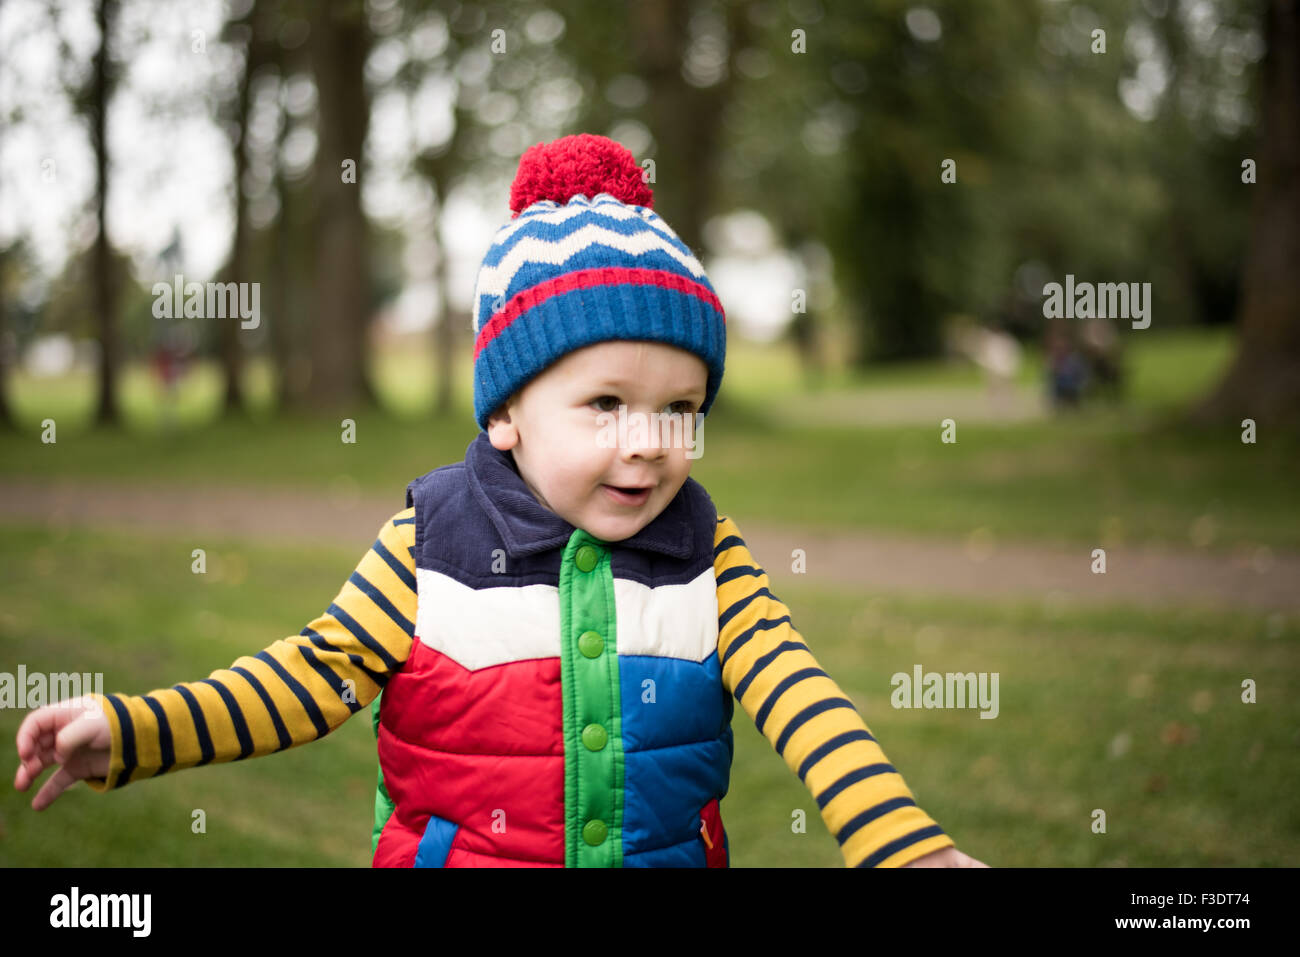 Boy running in park Stock Photo